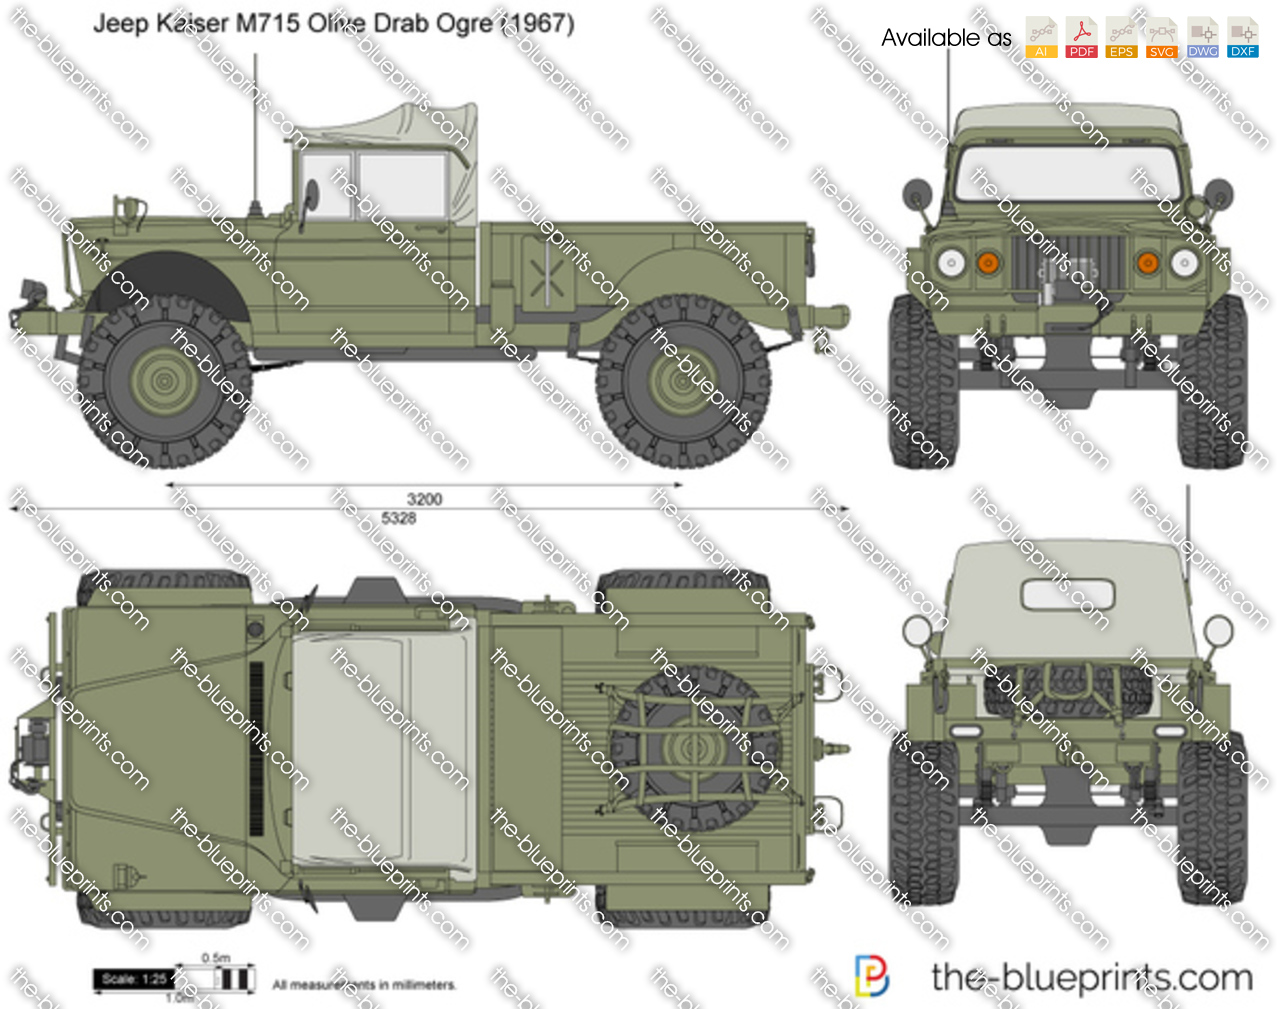 Jeep Kaiser M715 Olive Drab Ogre